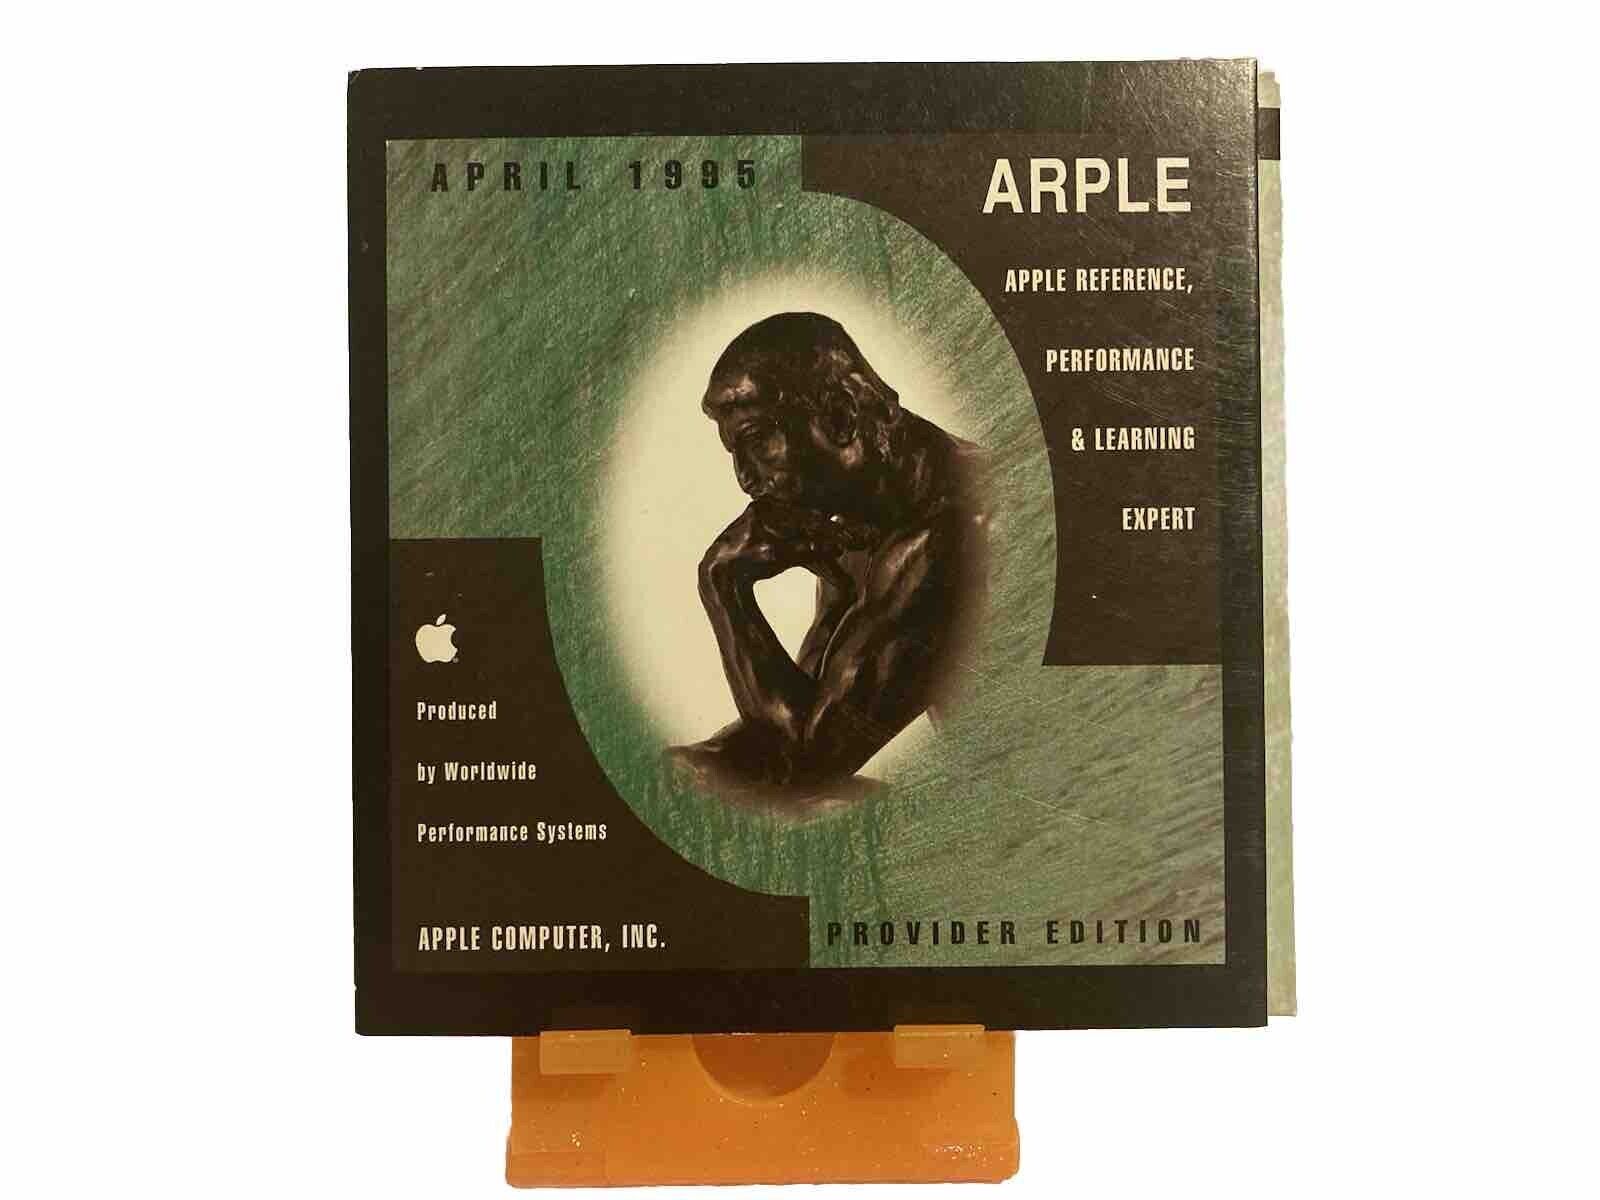 Apple ARPLE Macintosh Provider Edition April 1995 SoftWindows, Workgroup Server